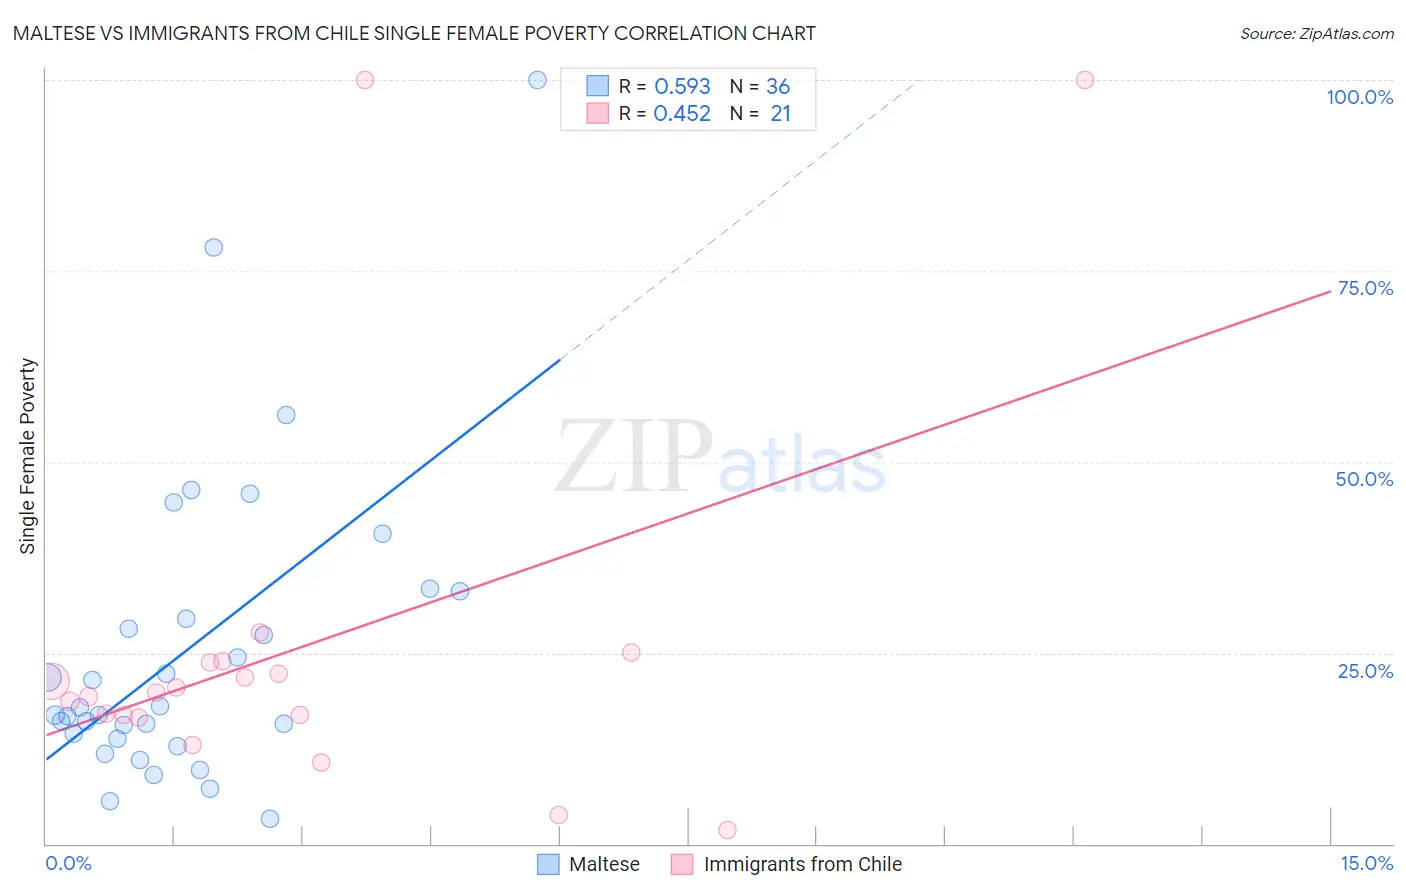 Maltese vs Immigrants from Chile Single Female Poverty